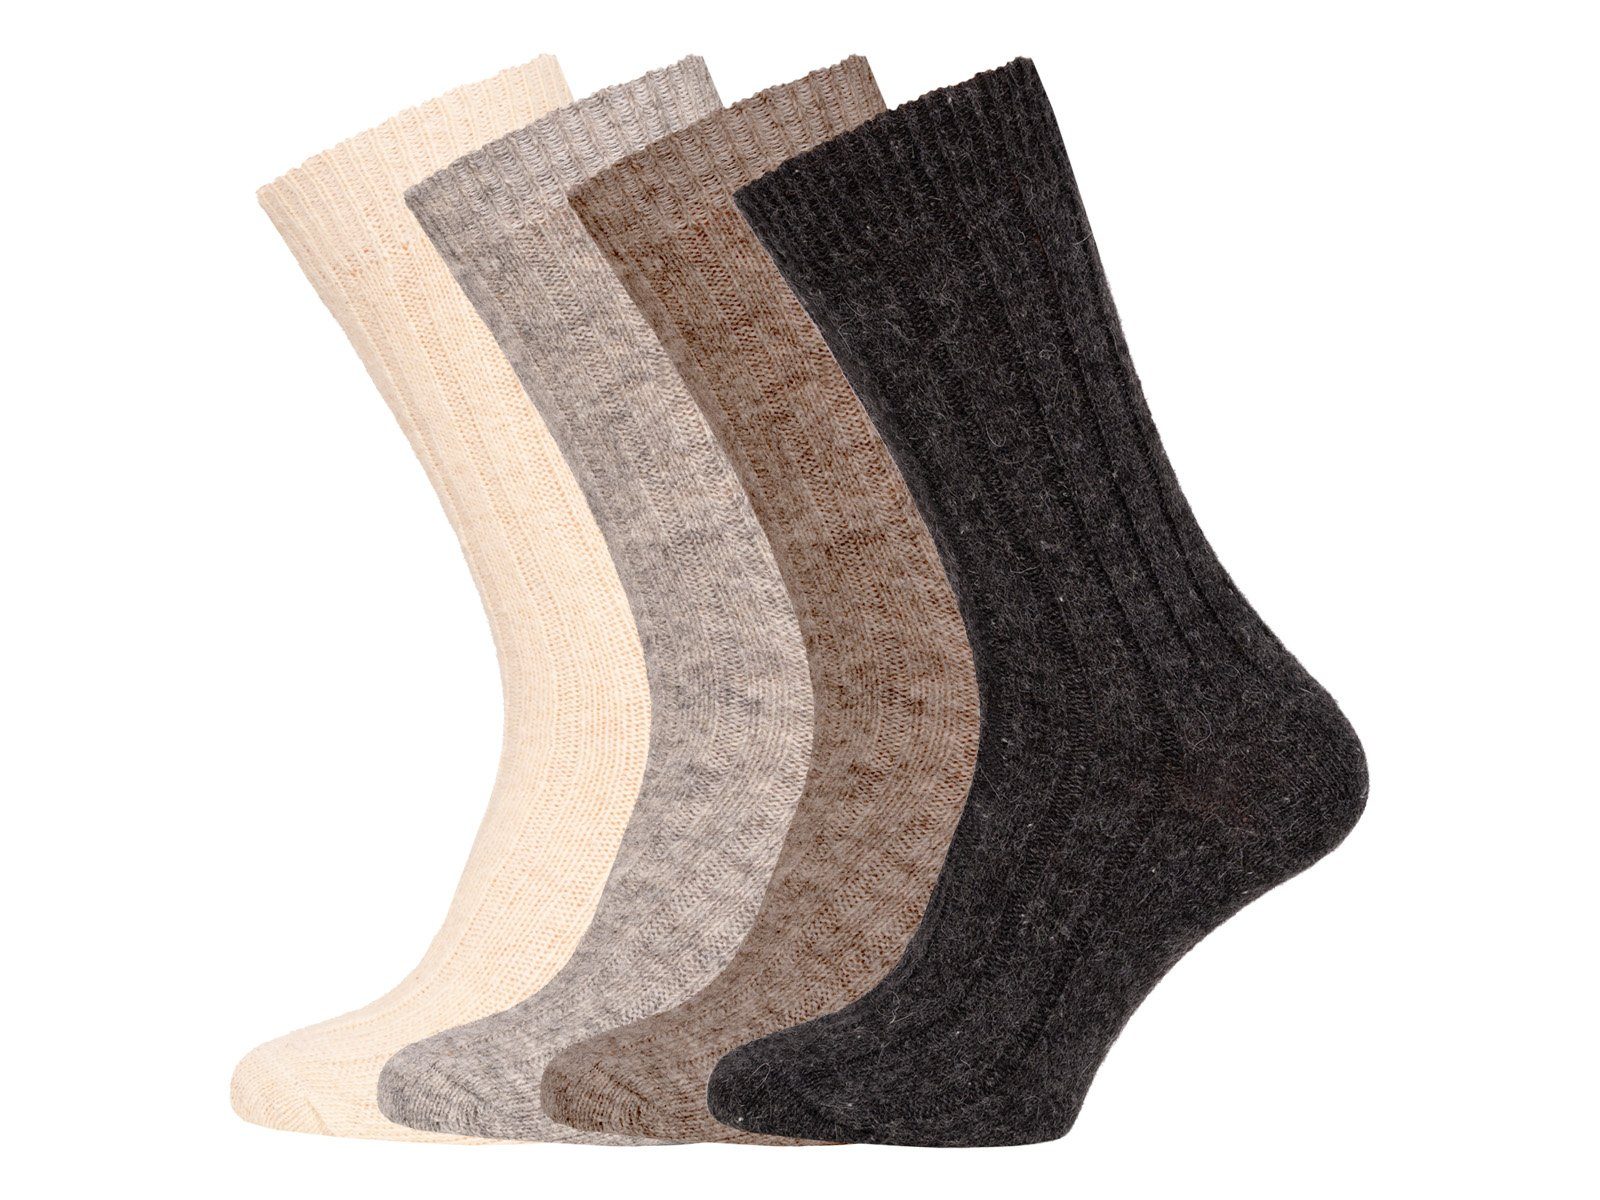 (Alpakawolle Grau 95% Socken Wollsocken aus HomeOfSocks & Schurwolle) Wolle